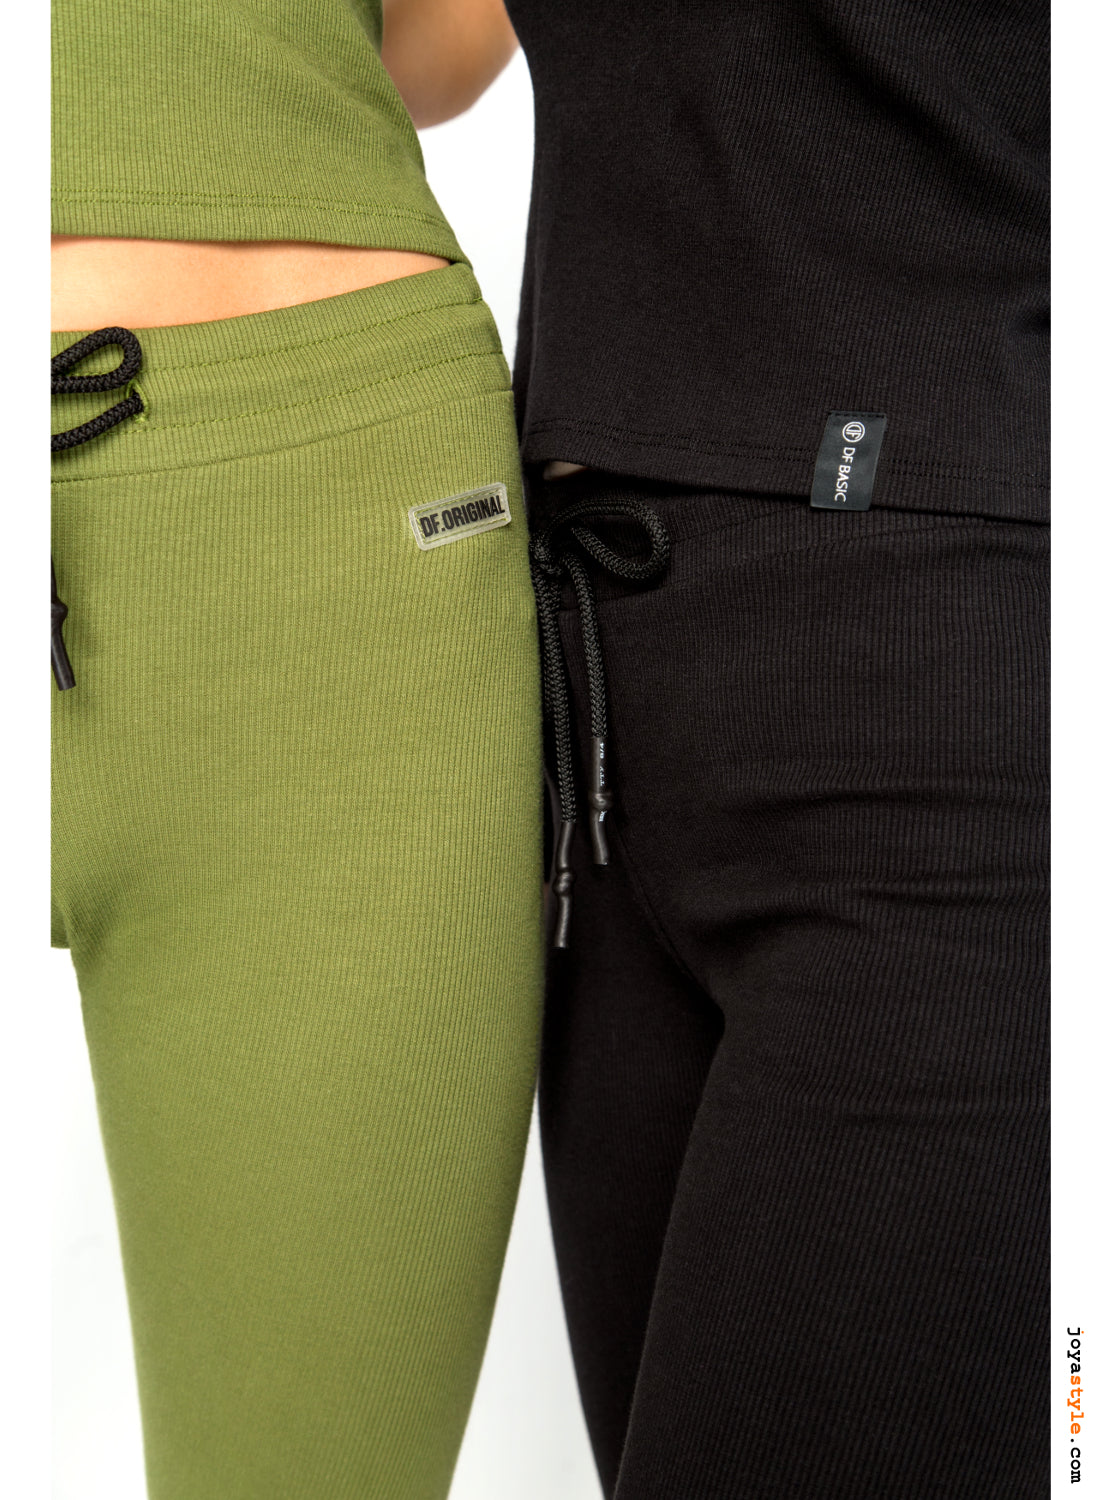 Jogger Women's Pants Leggings | Khaki Green Super Soft Fabric